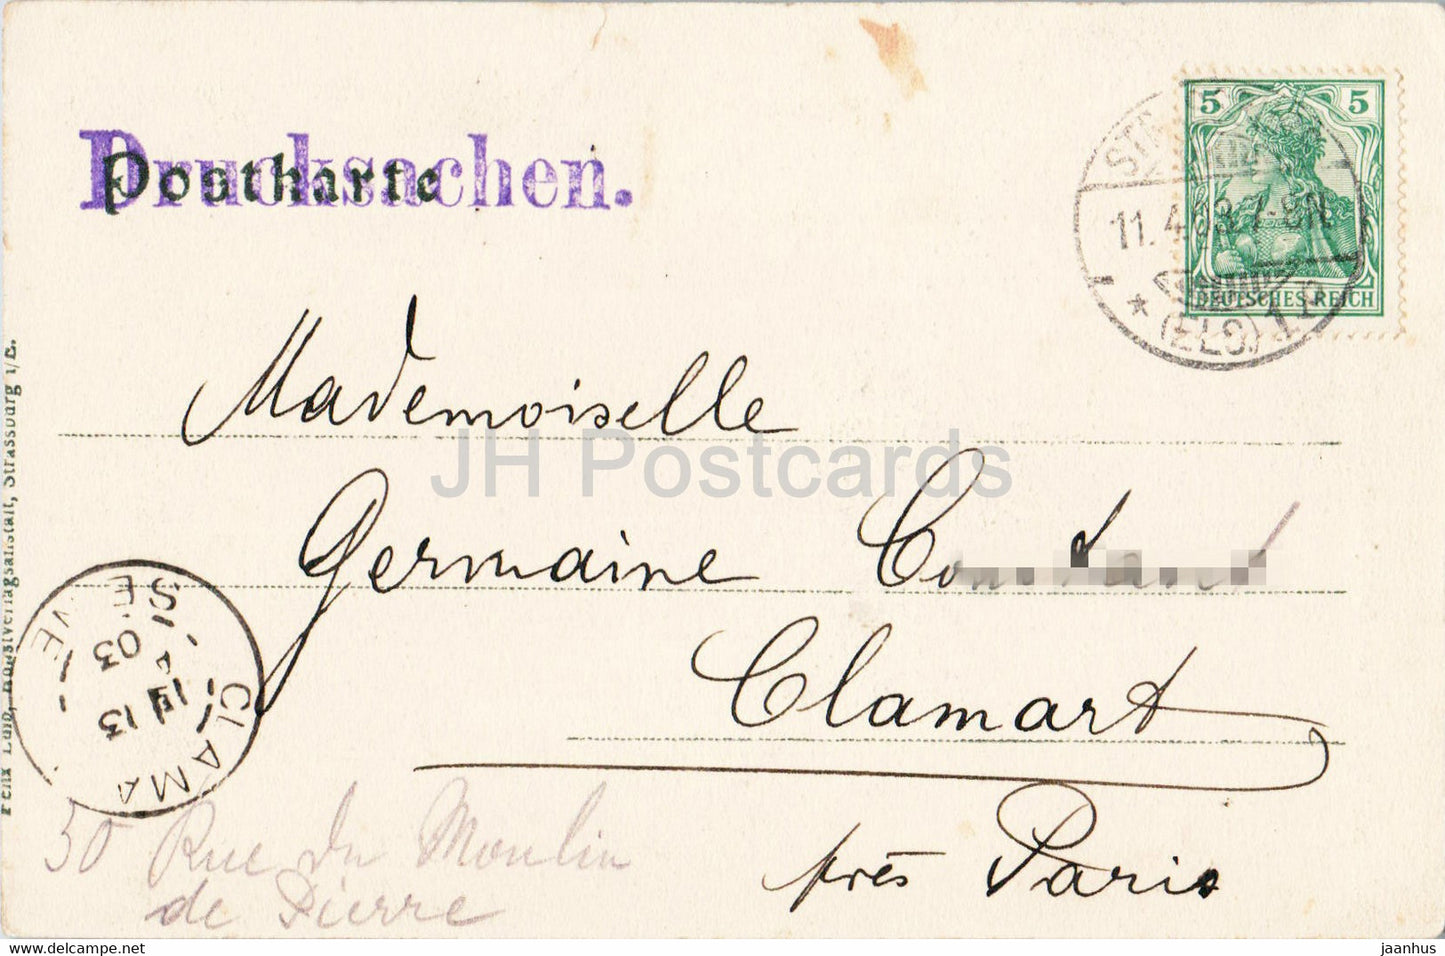 Strassburg - Strasbourg - Munsterbeleuchtung am 8 Marz 1903 - Drucksachen - old postcard - 1903 - France - used